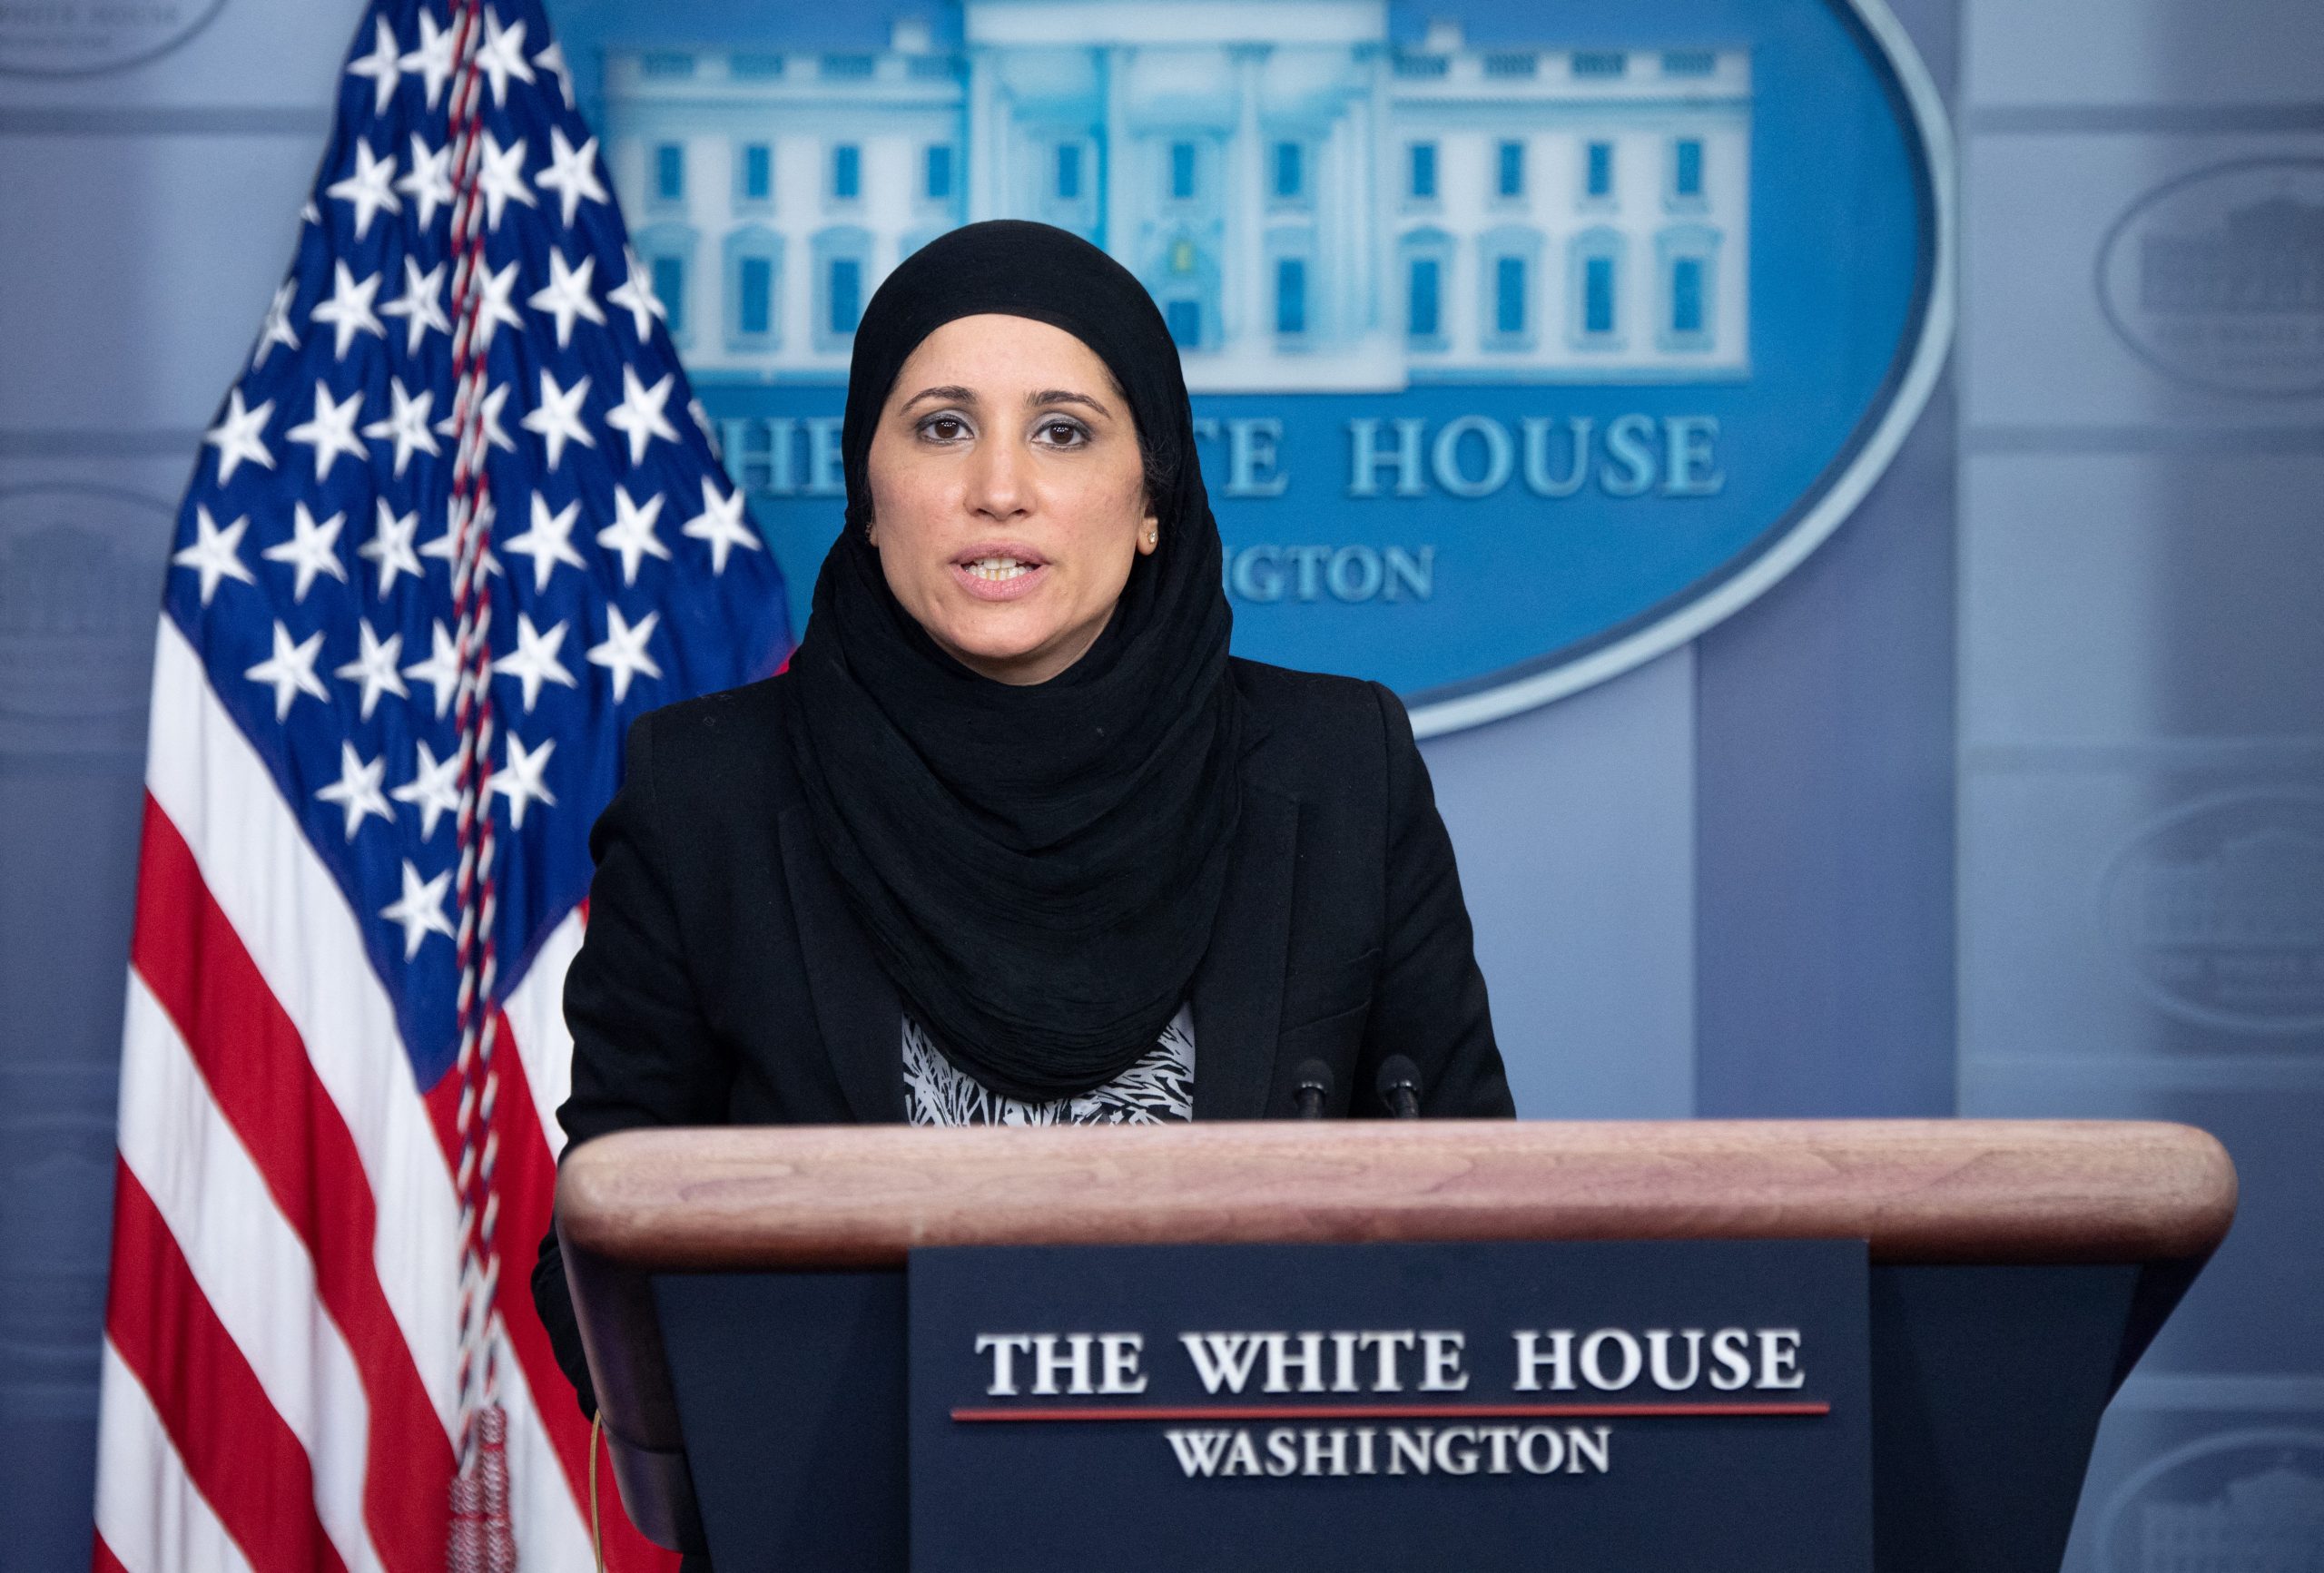 Sameera Fazili: The Hijab-clad economist to speak at the White House